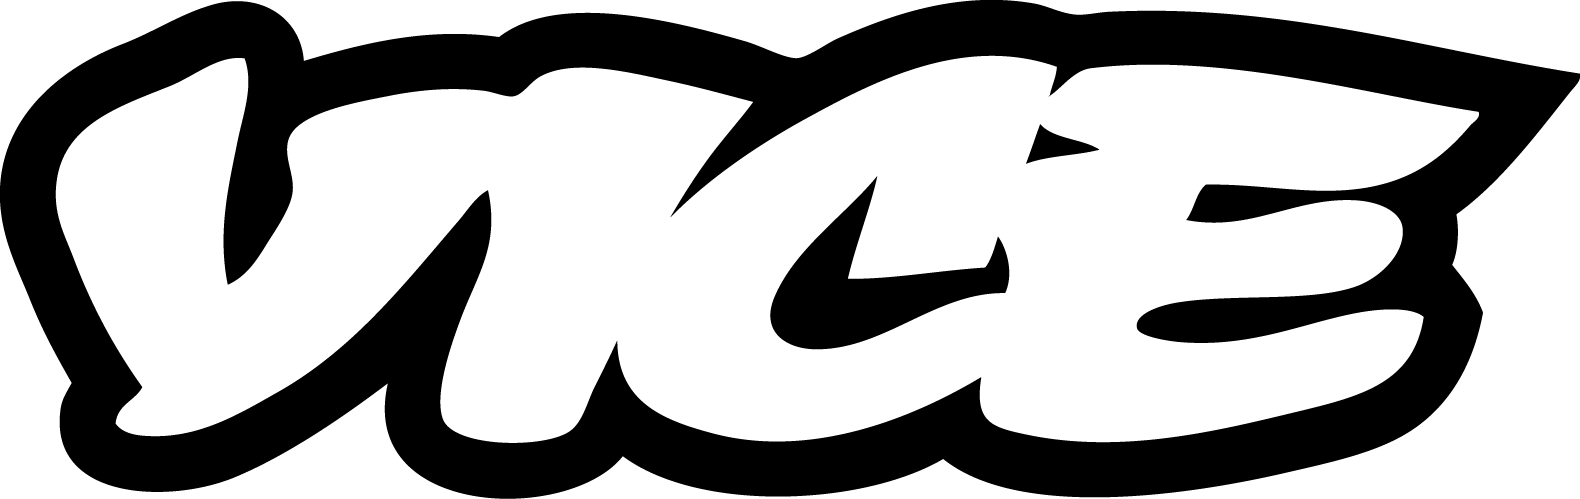 vice logo - websites like buzzfeed